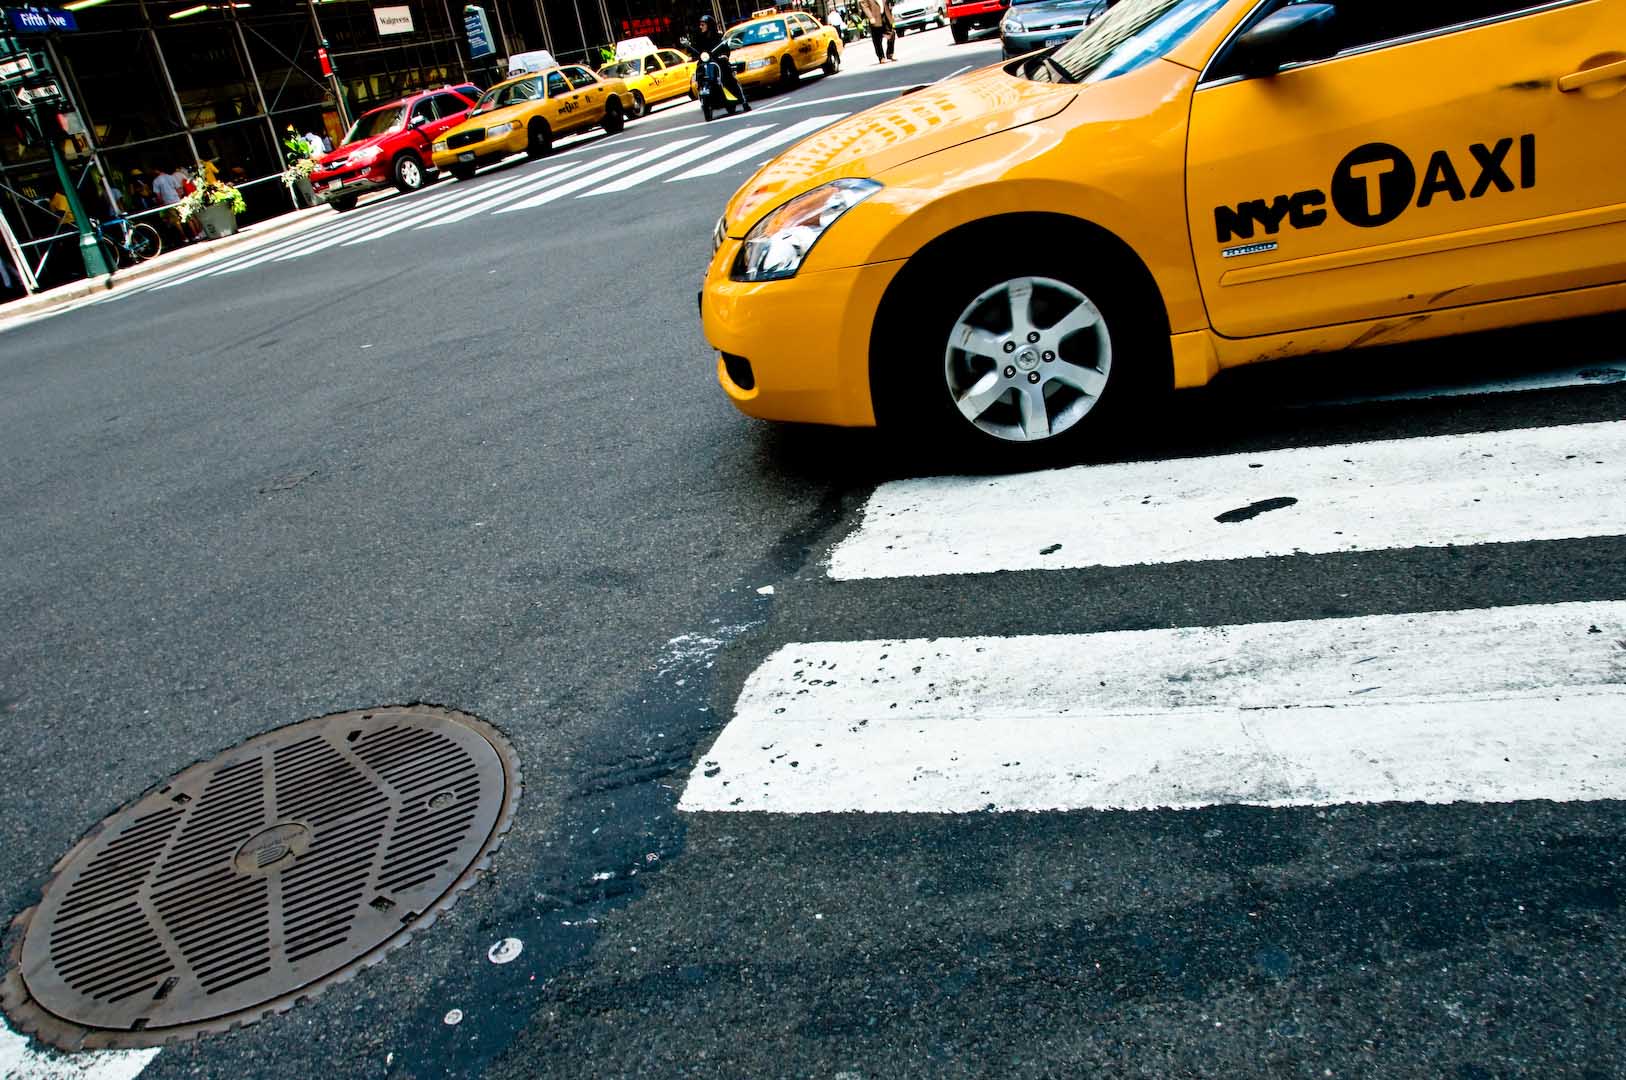 Down the drain yellow cab nyc taxi new york city manhattan car sidewalk cross road stop downtown.jpg